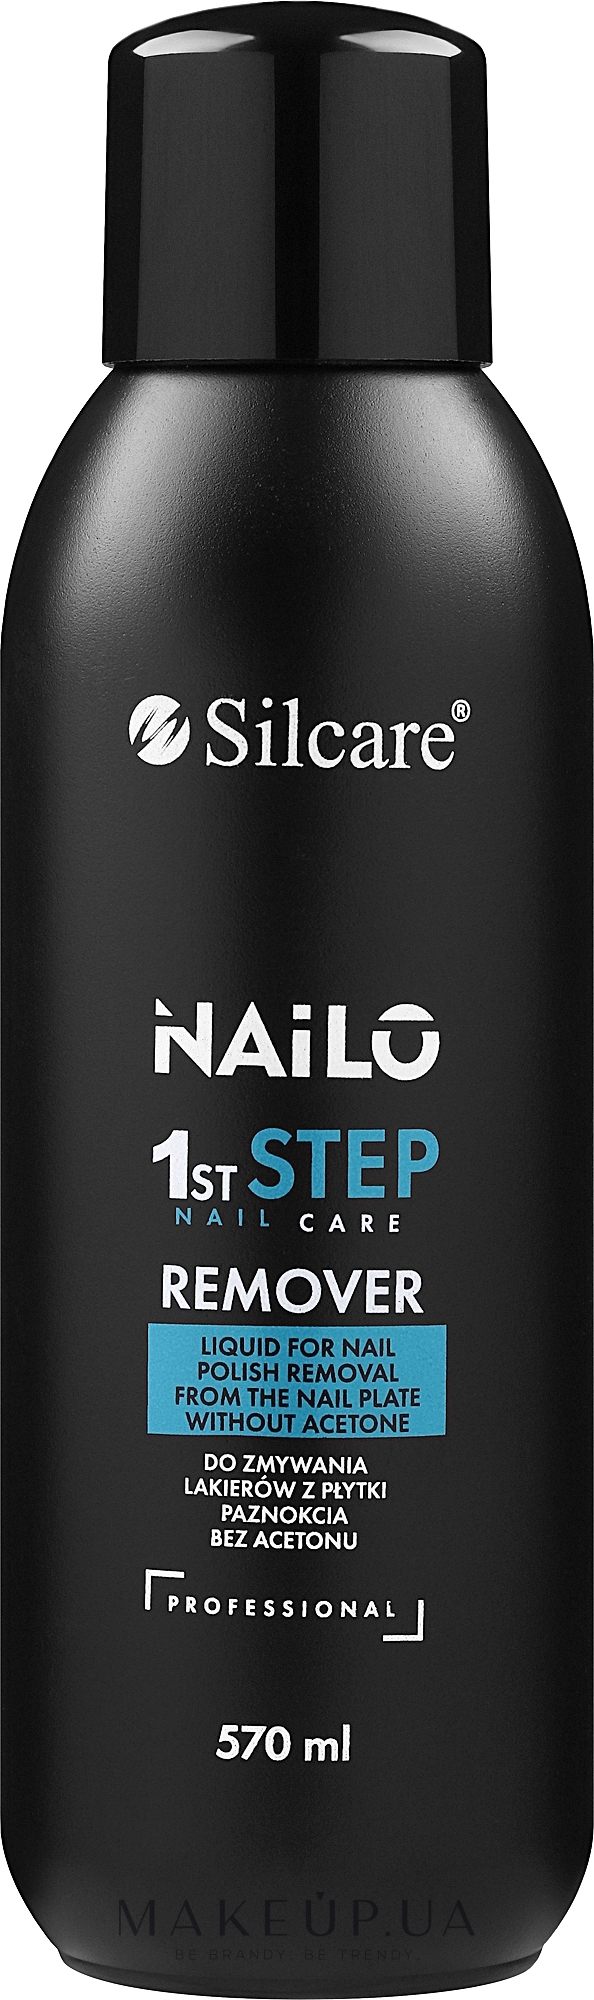 Рідина для зняття лаку без ацетону - Silcare Nailo 1st Step Remover — фото 570ml